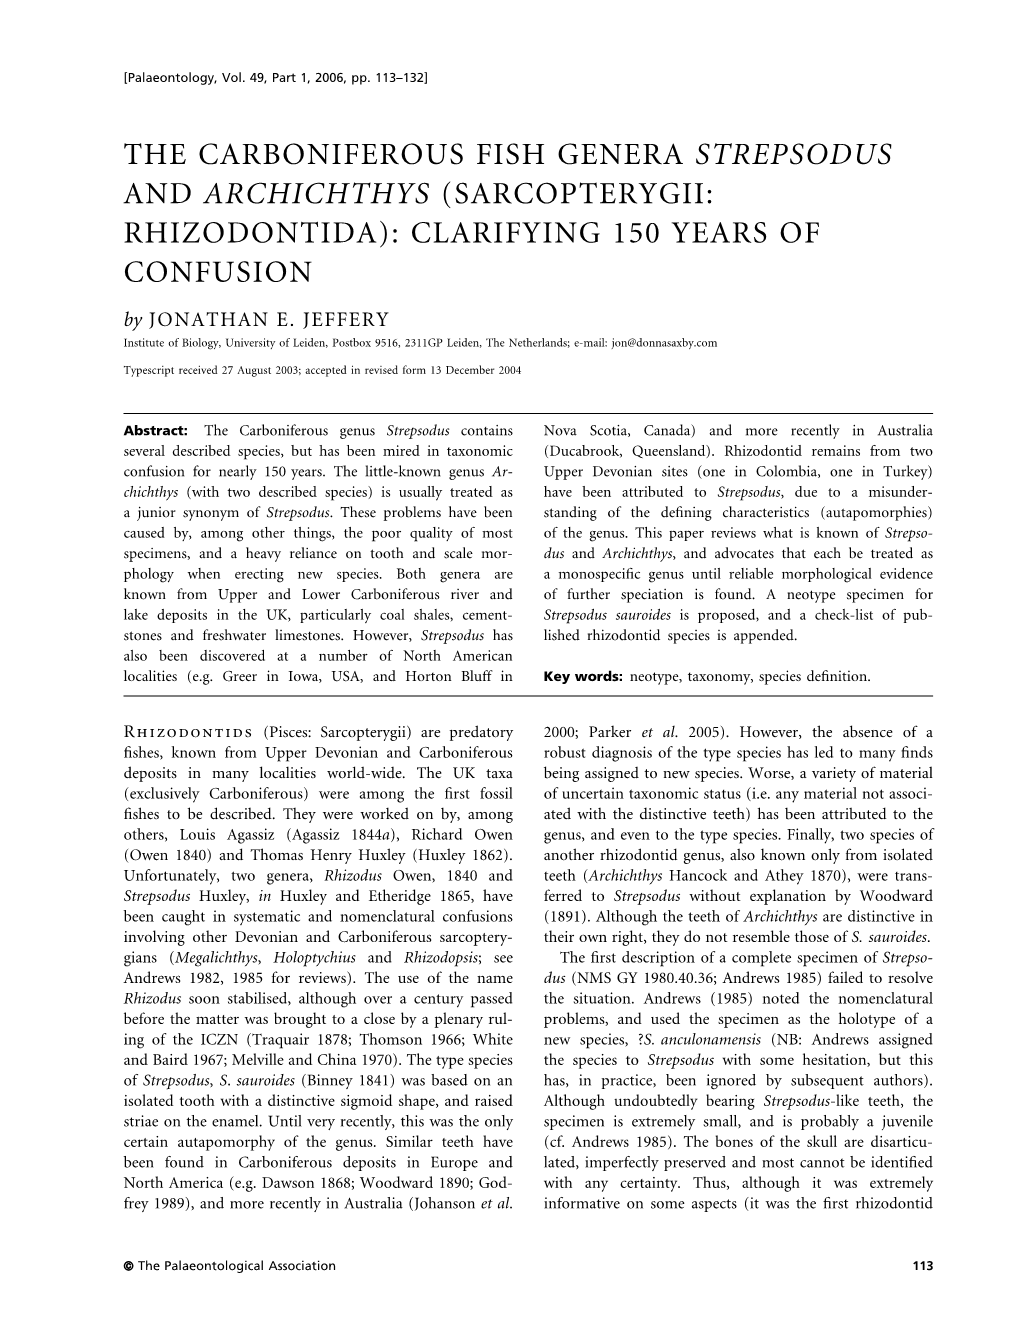 THE CARBONIFEROUS FISH GENERA STREPSODUS and ARCHICHTHYS (SARCOPTERYGII: RHIZODONTIDA): CLARIFYING 150 YEARS of CONFUSION by JONATHAN E